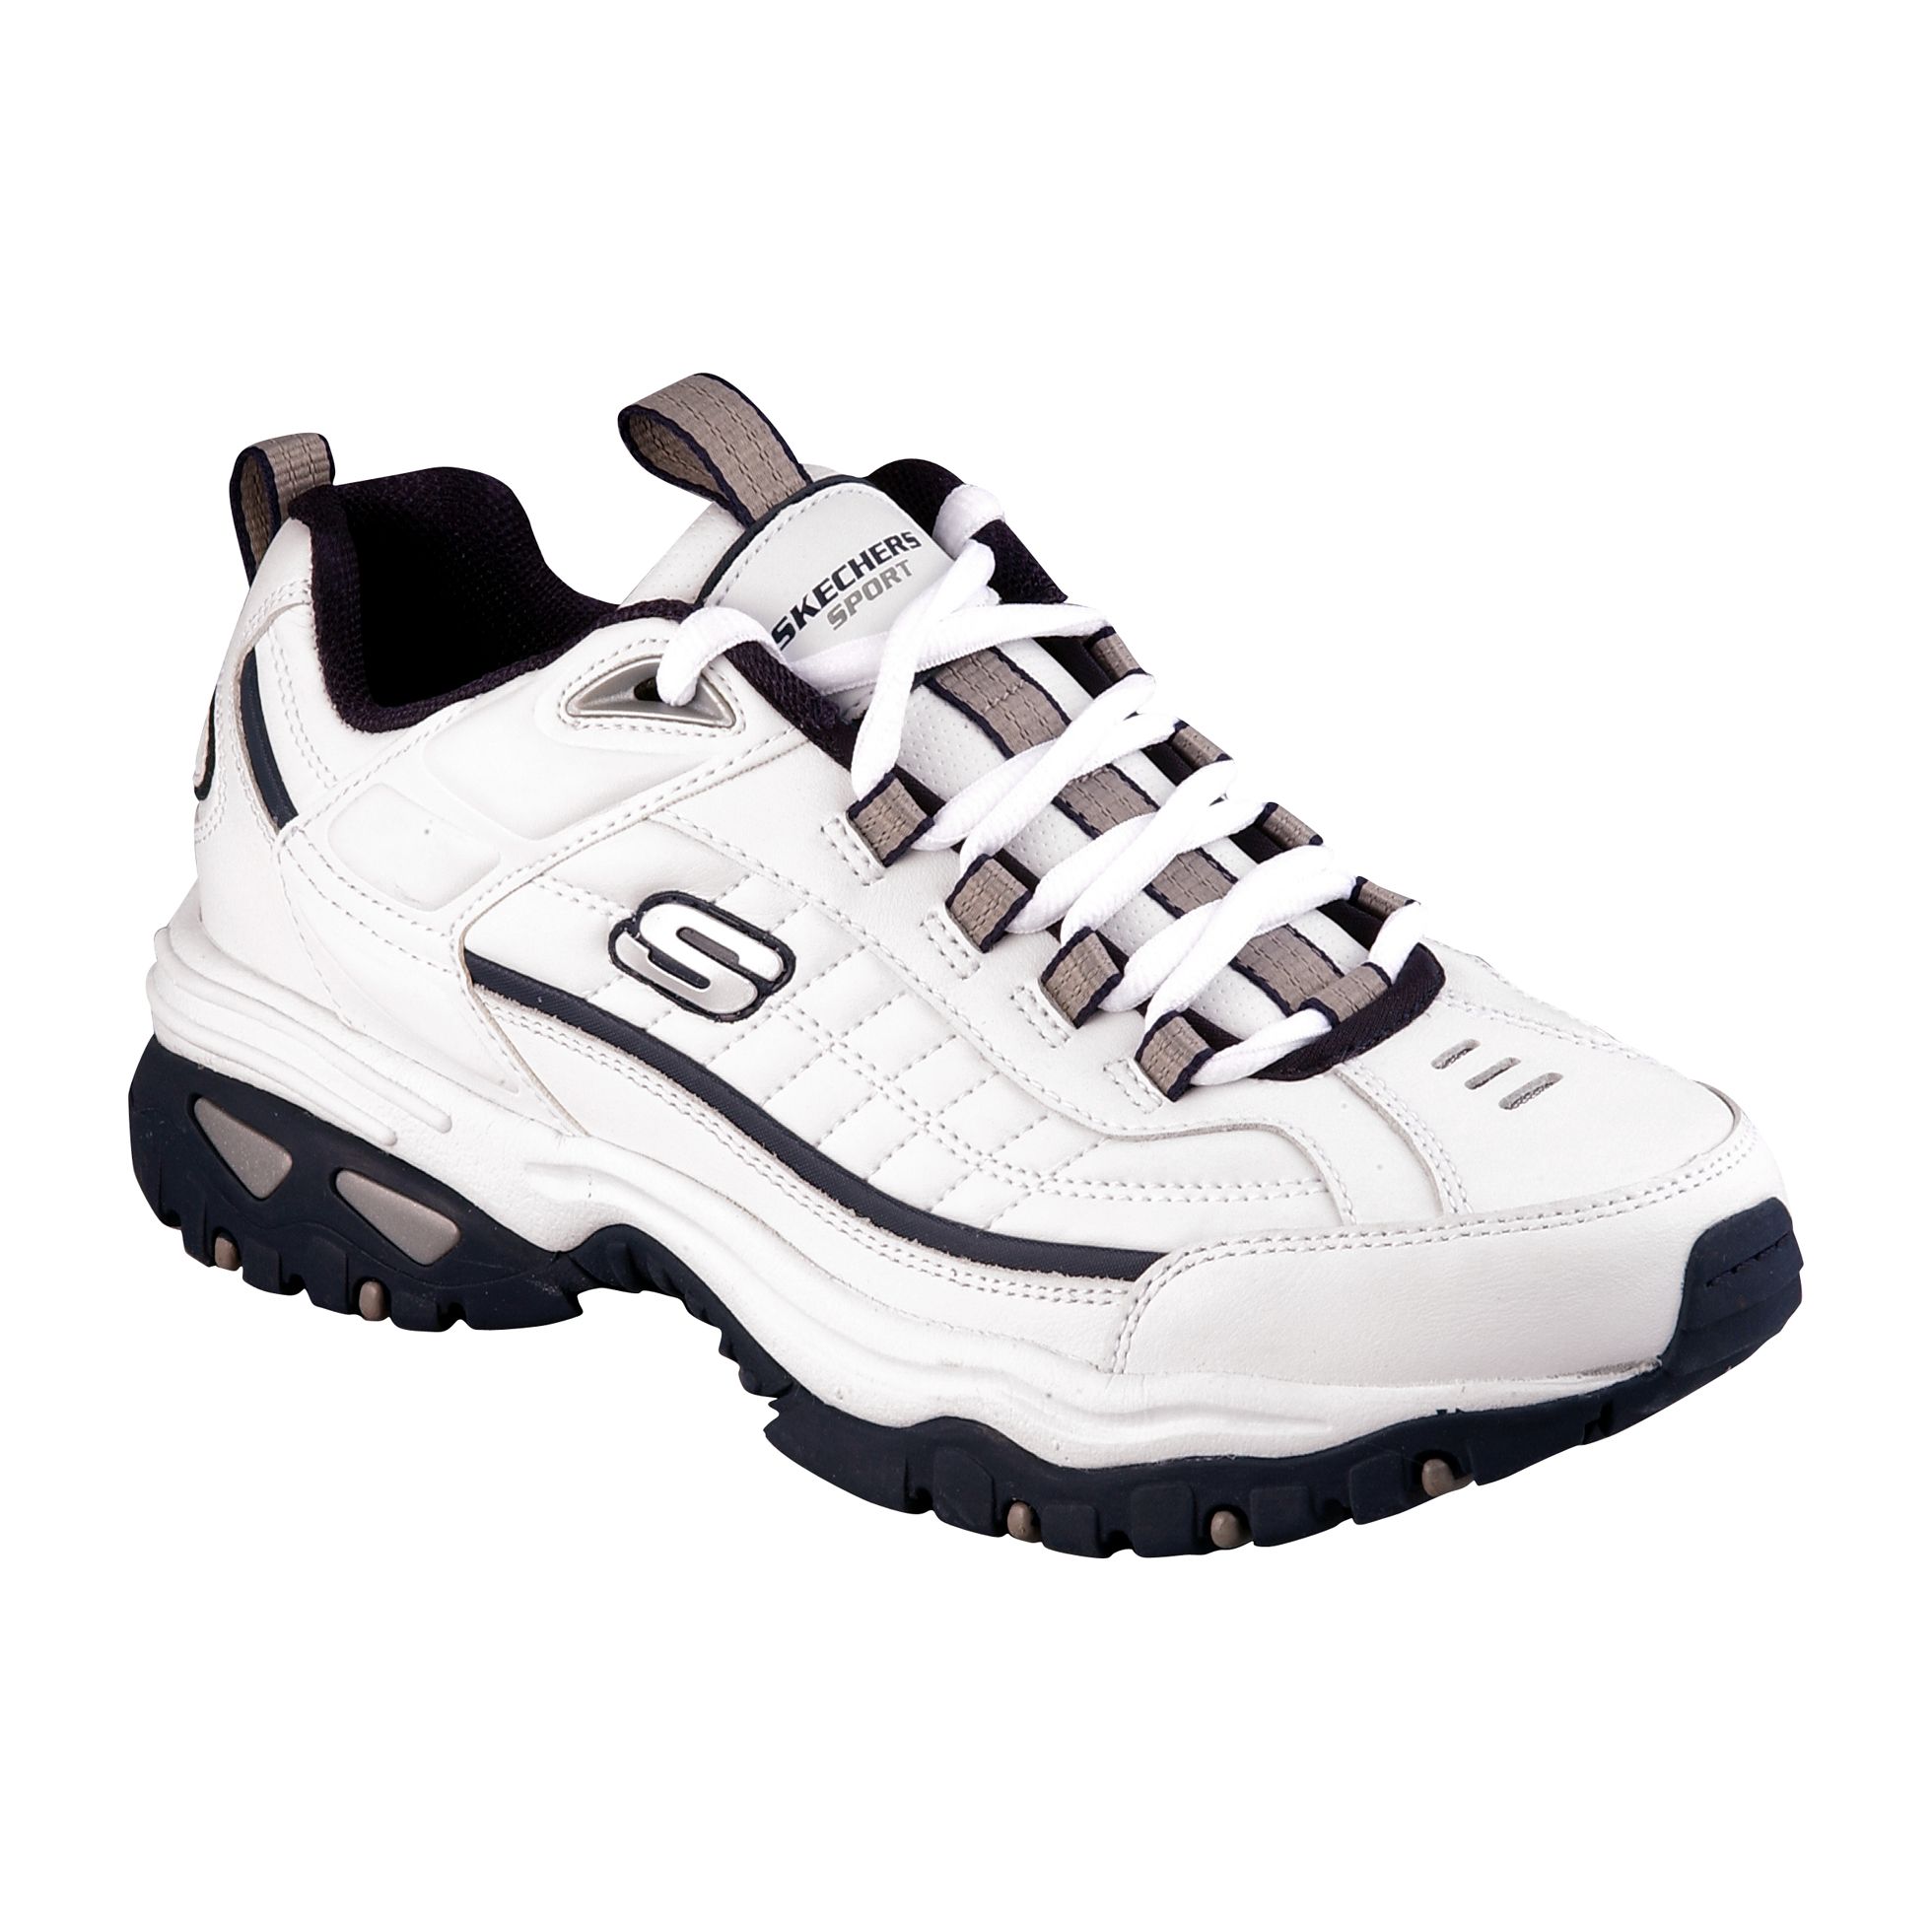 Skechers Men's Afterburn Sneaker - White/Navy Wide Width Avaliable